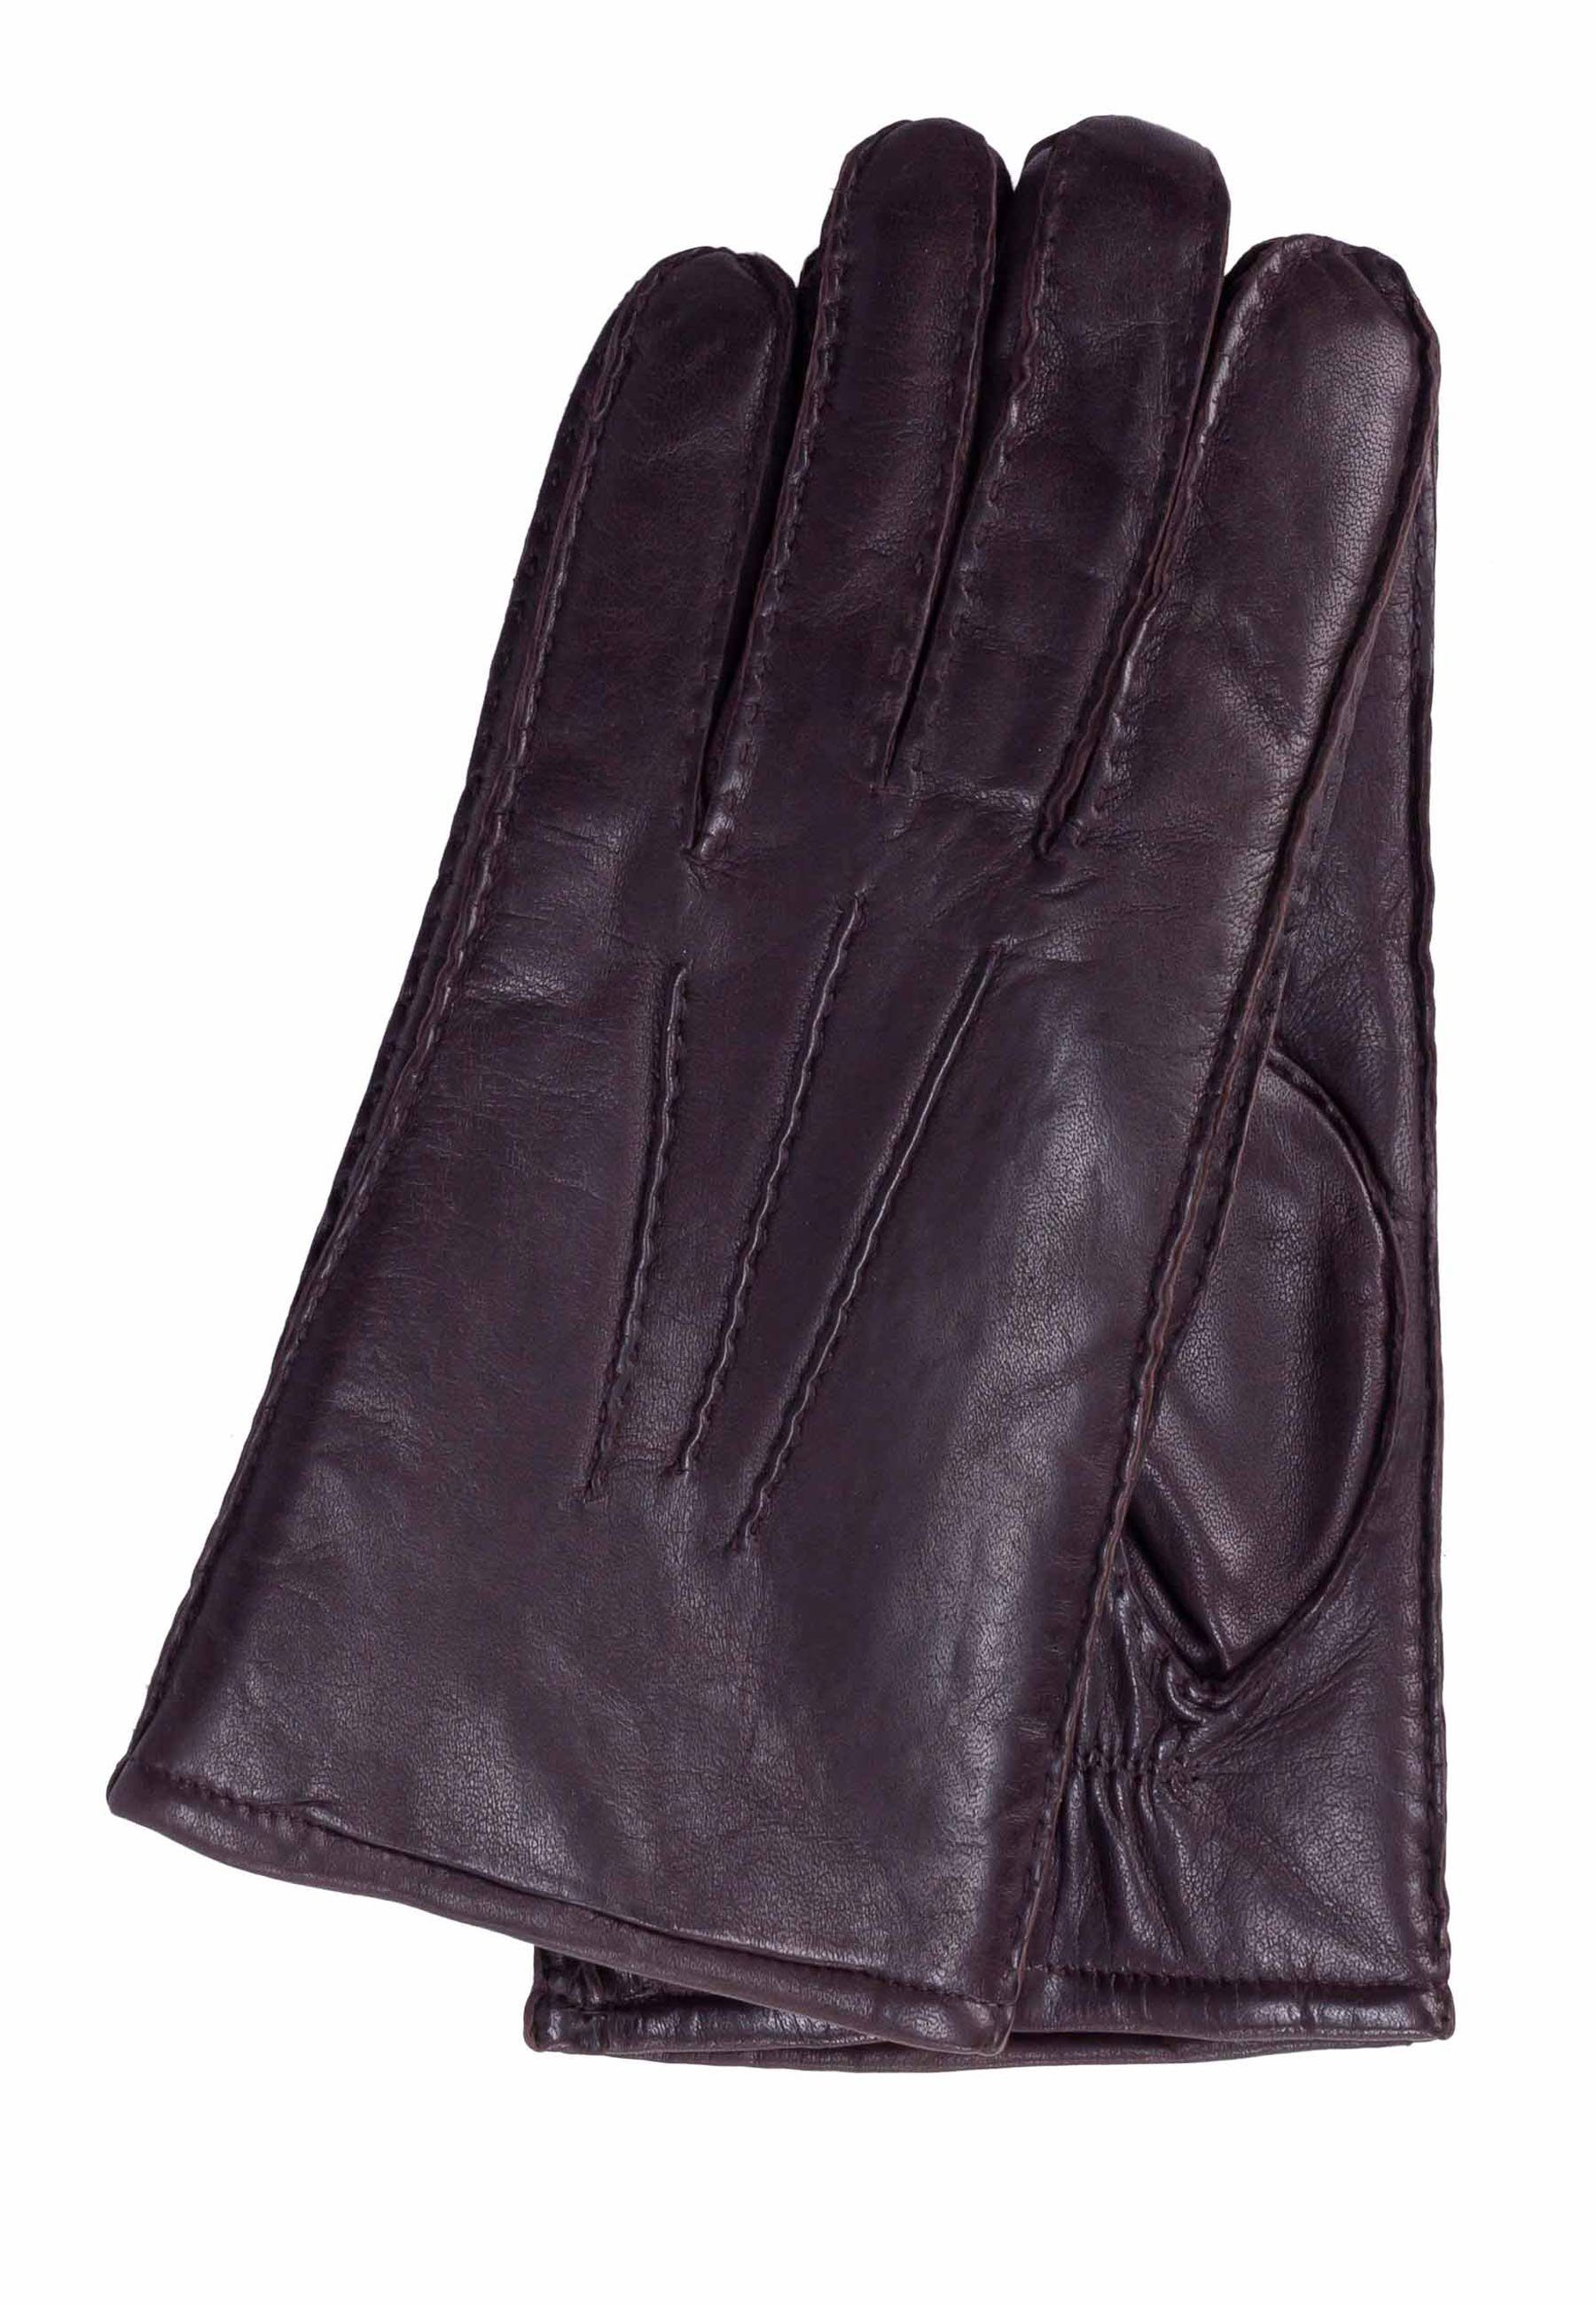 klassischem Arctic Design dunkelbraun Lederhandschuhe Gloves GRETCHEN in Mens